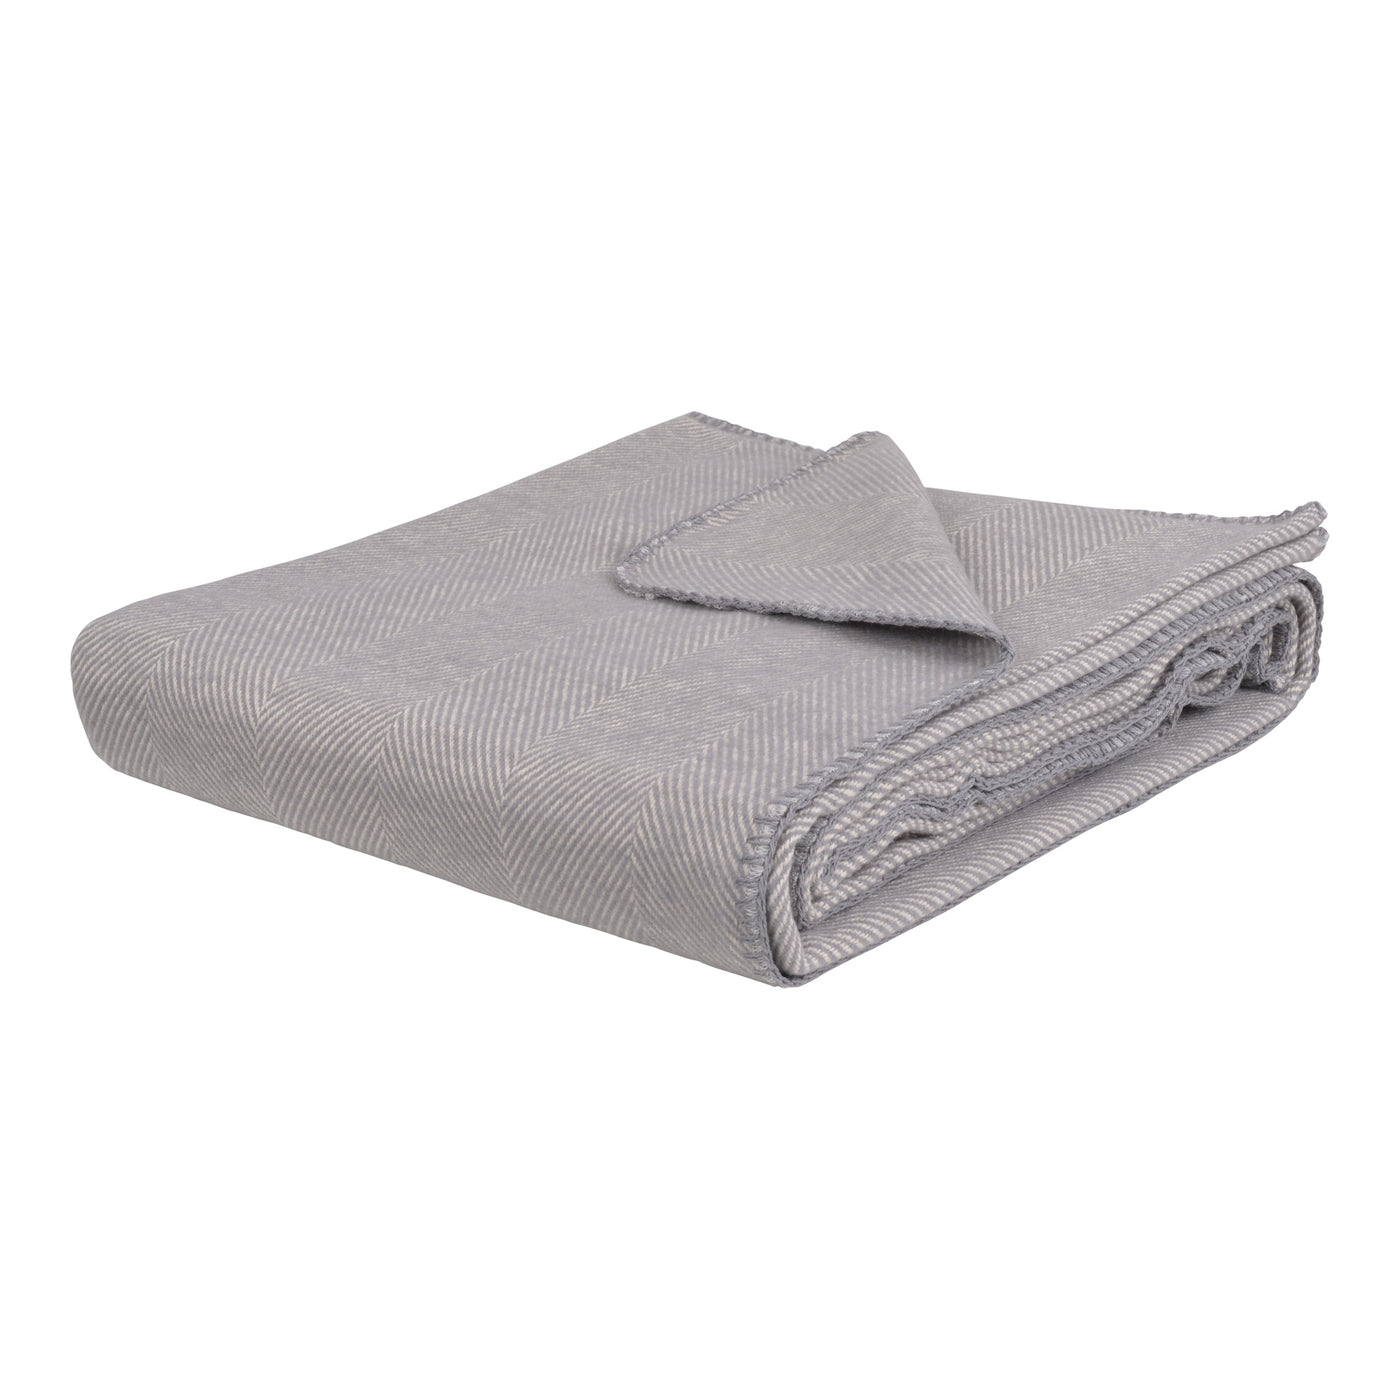 Lisbon Cotton Herringbone Blanket and Throw - Blanket Stitch Finish